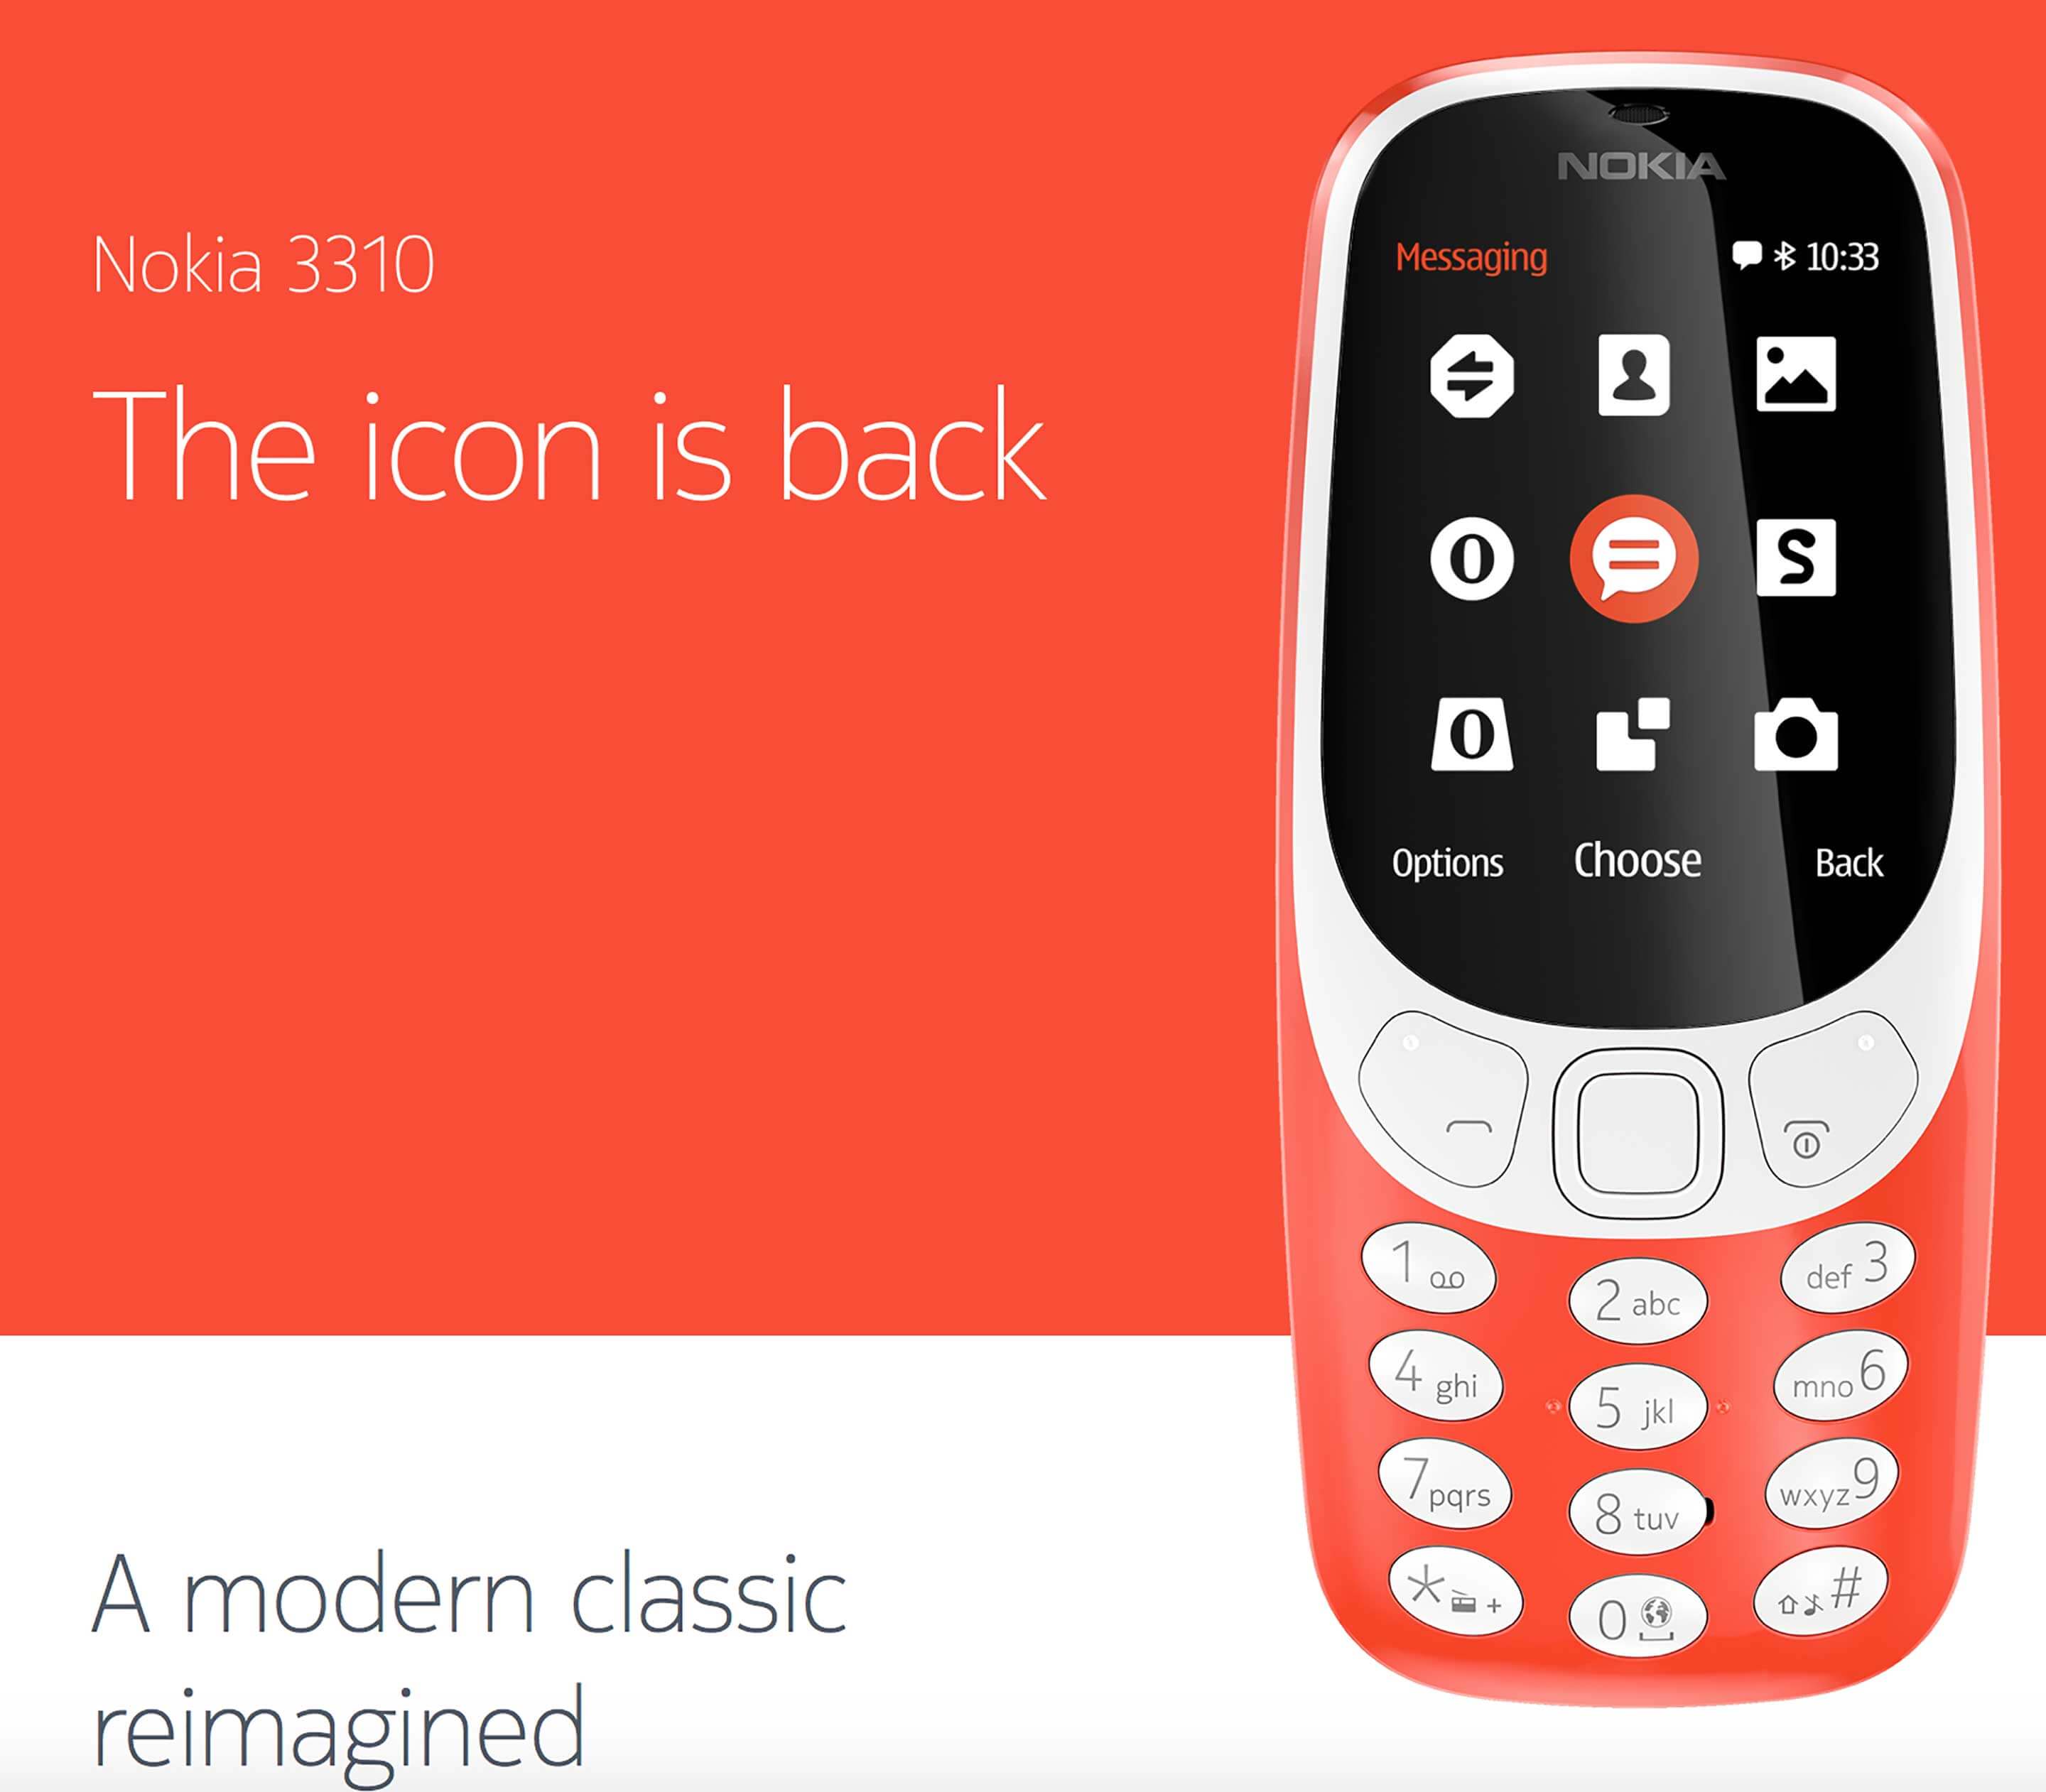 Nokia 3310 (2017) Relaunch: A Classic Case of Rebranding